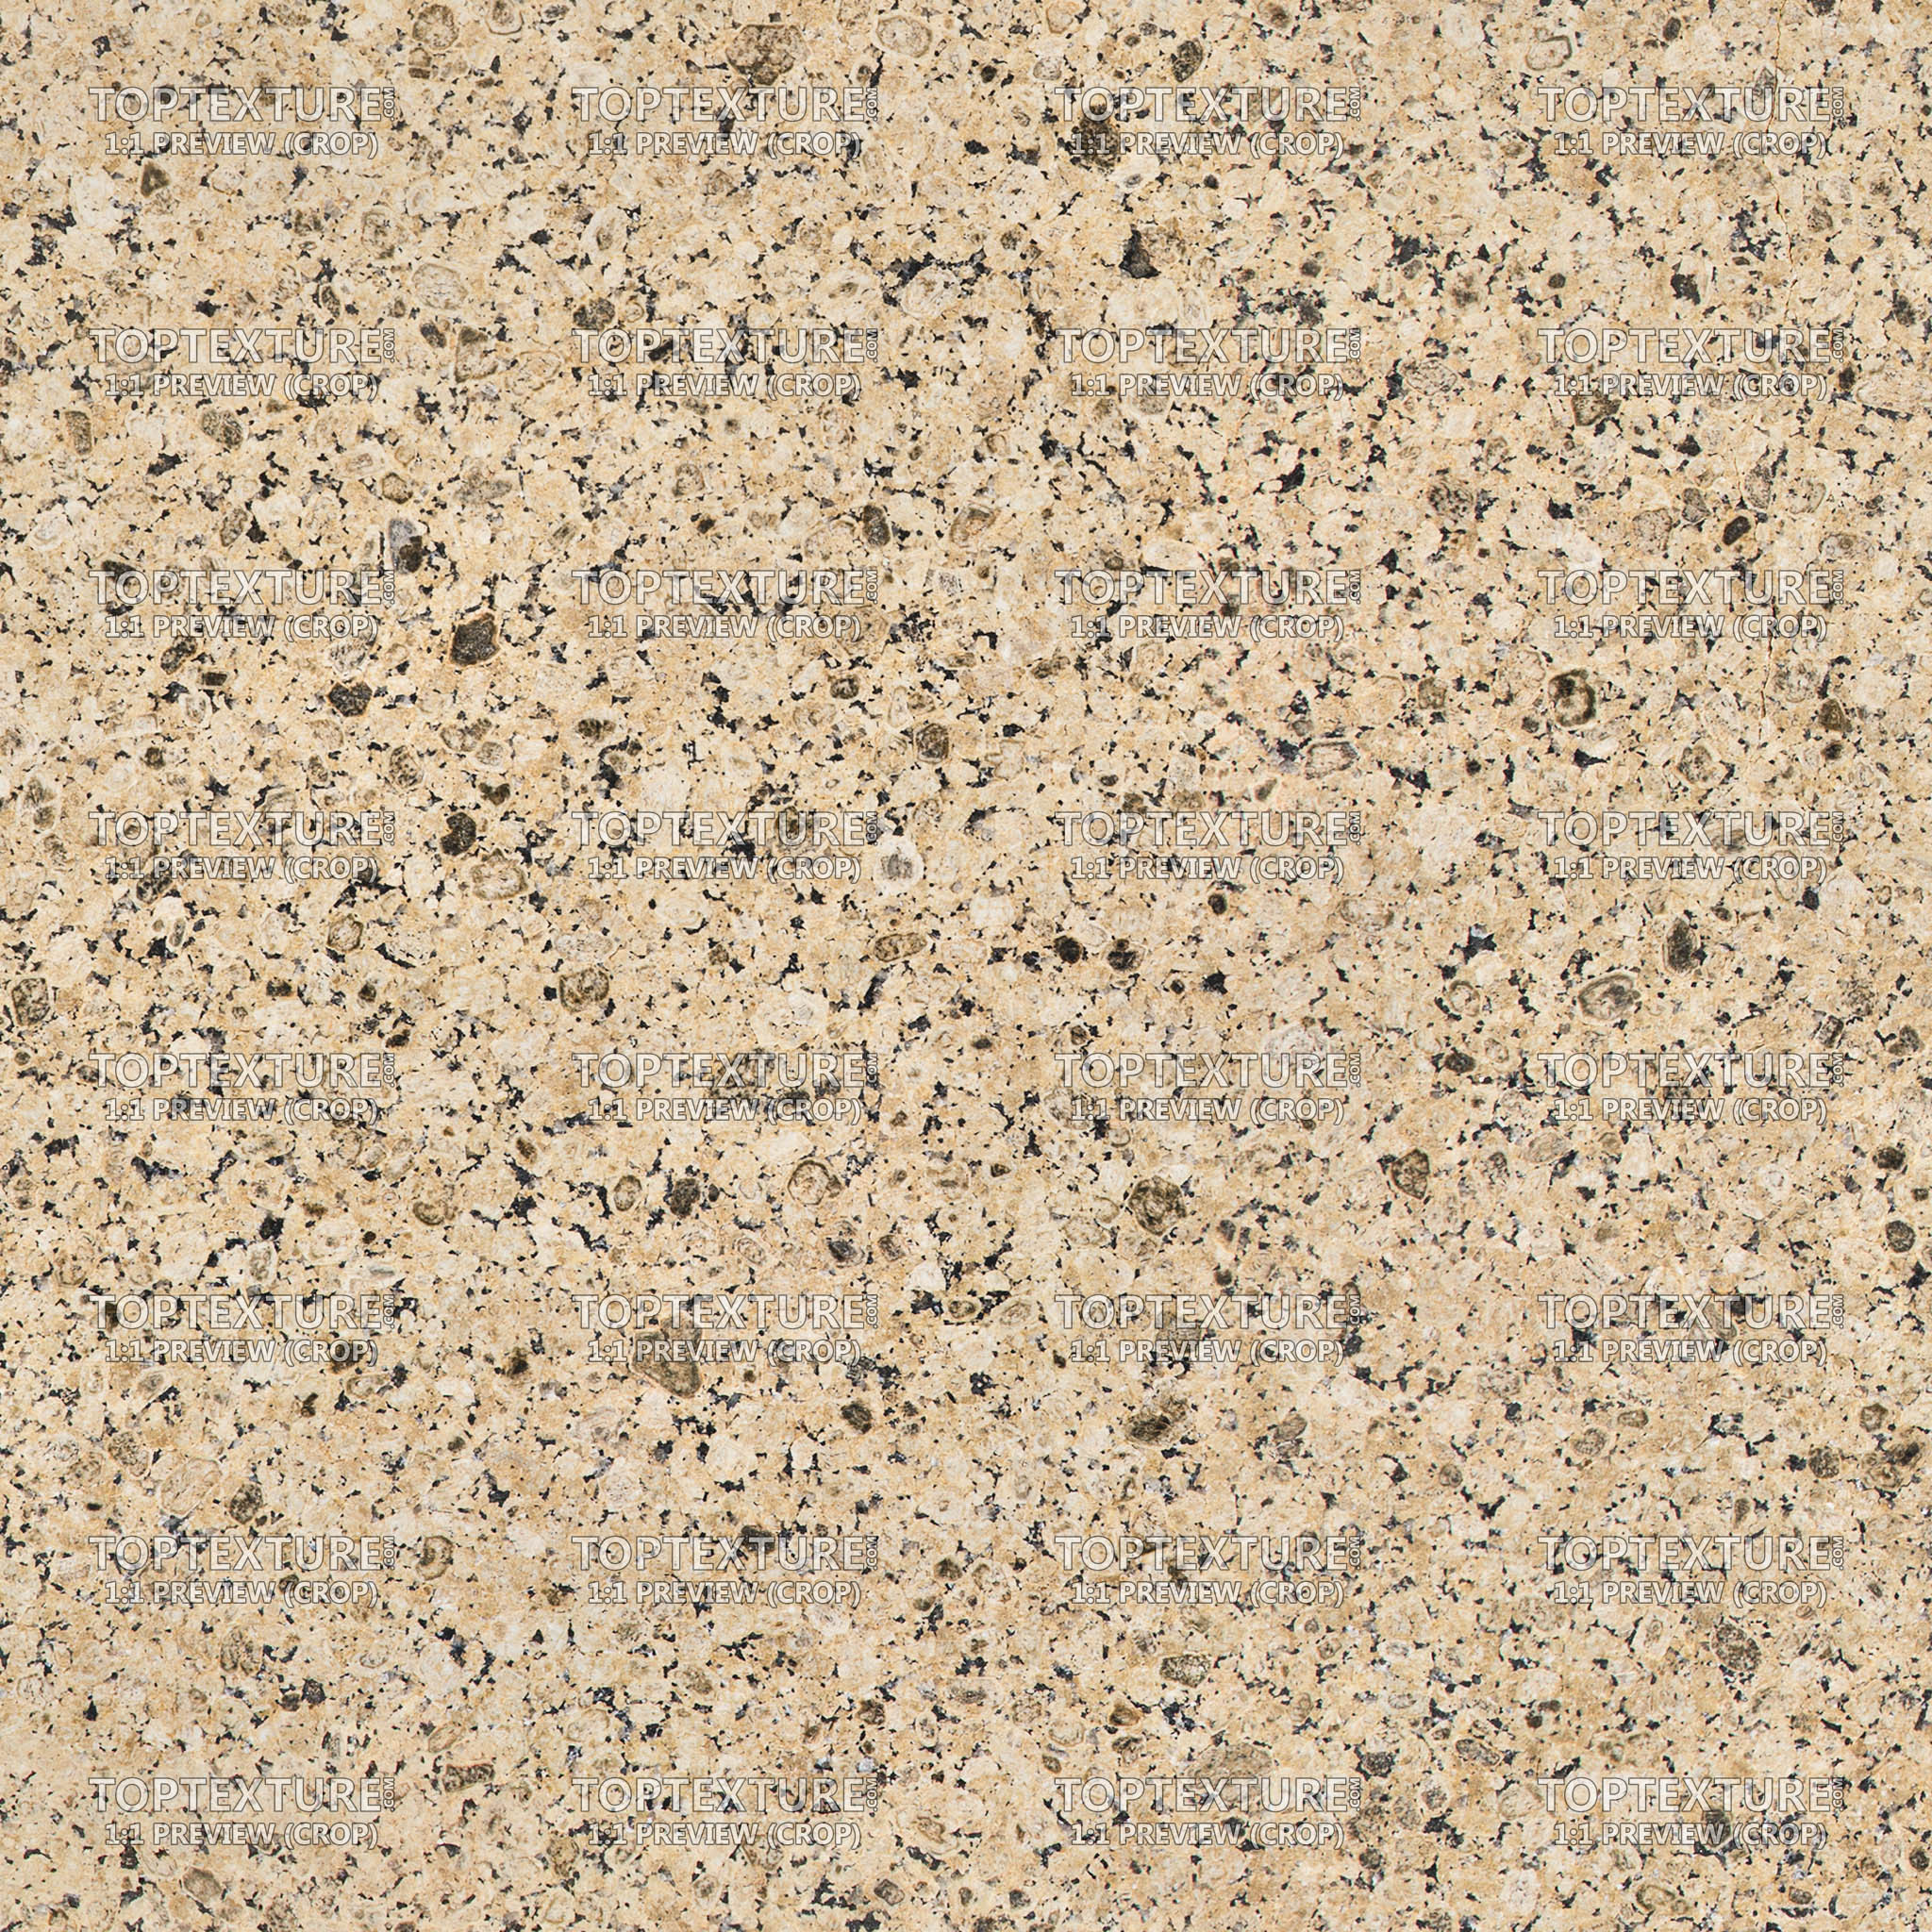 Beige Granite With Little Black Spots - 100% zoom